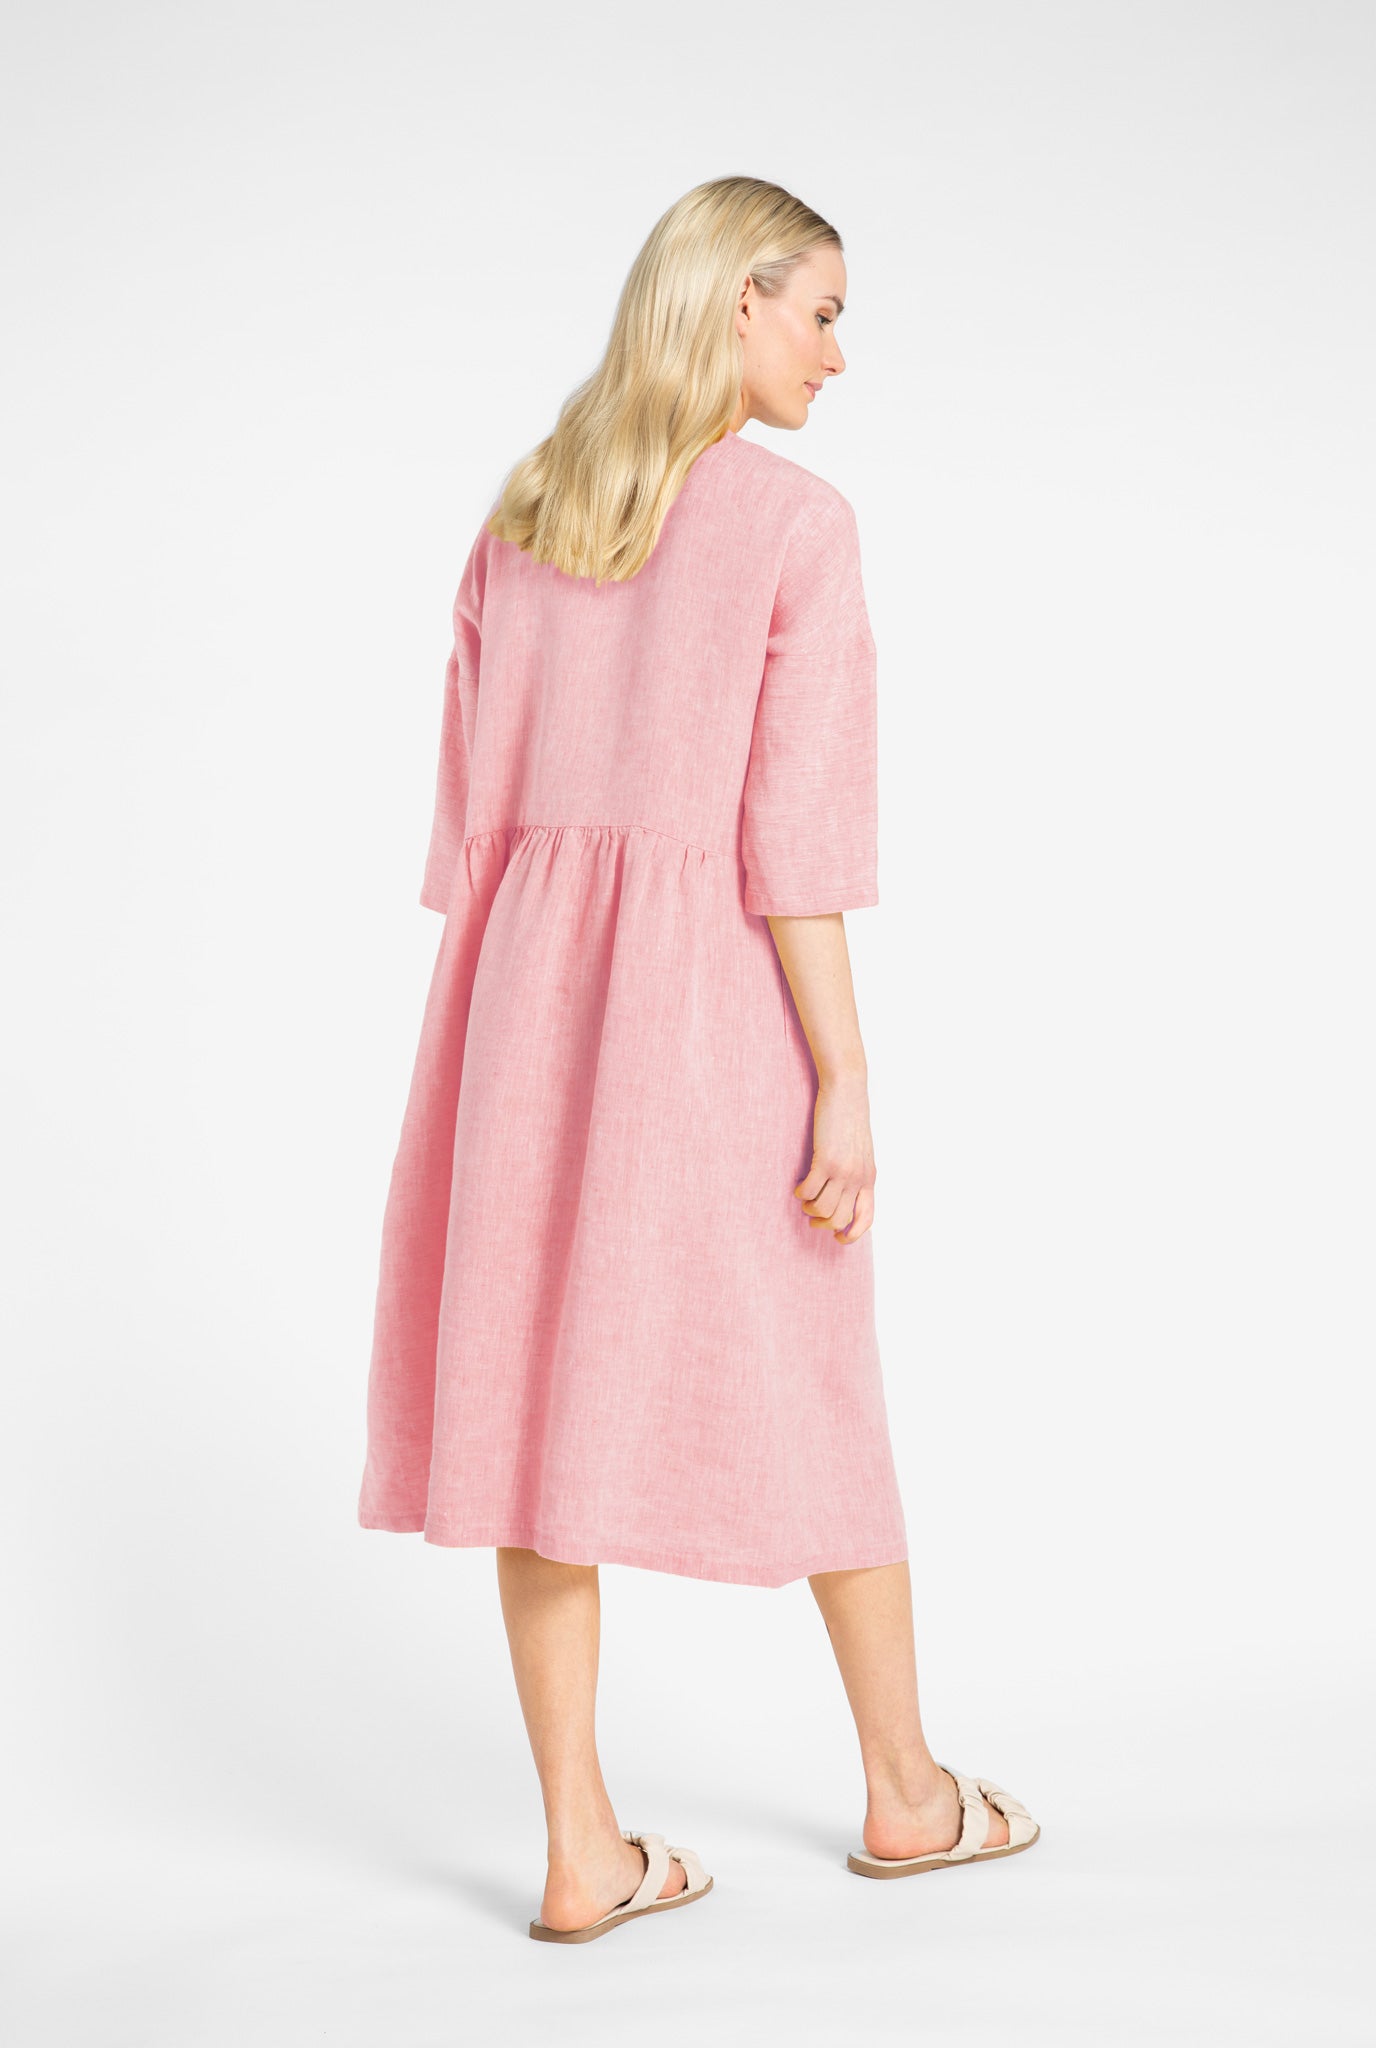 Kuusama Nova Linen 3/4 Sleeve Dress, Pink Melange